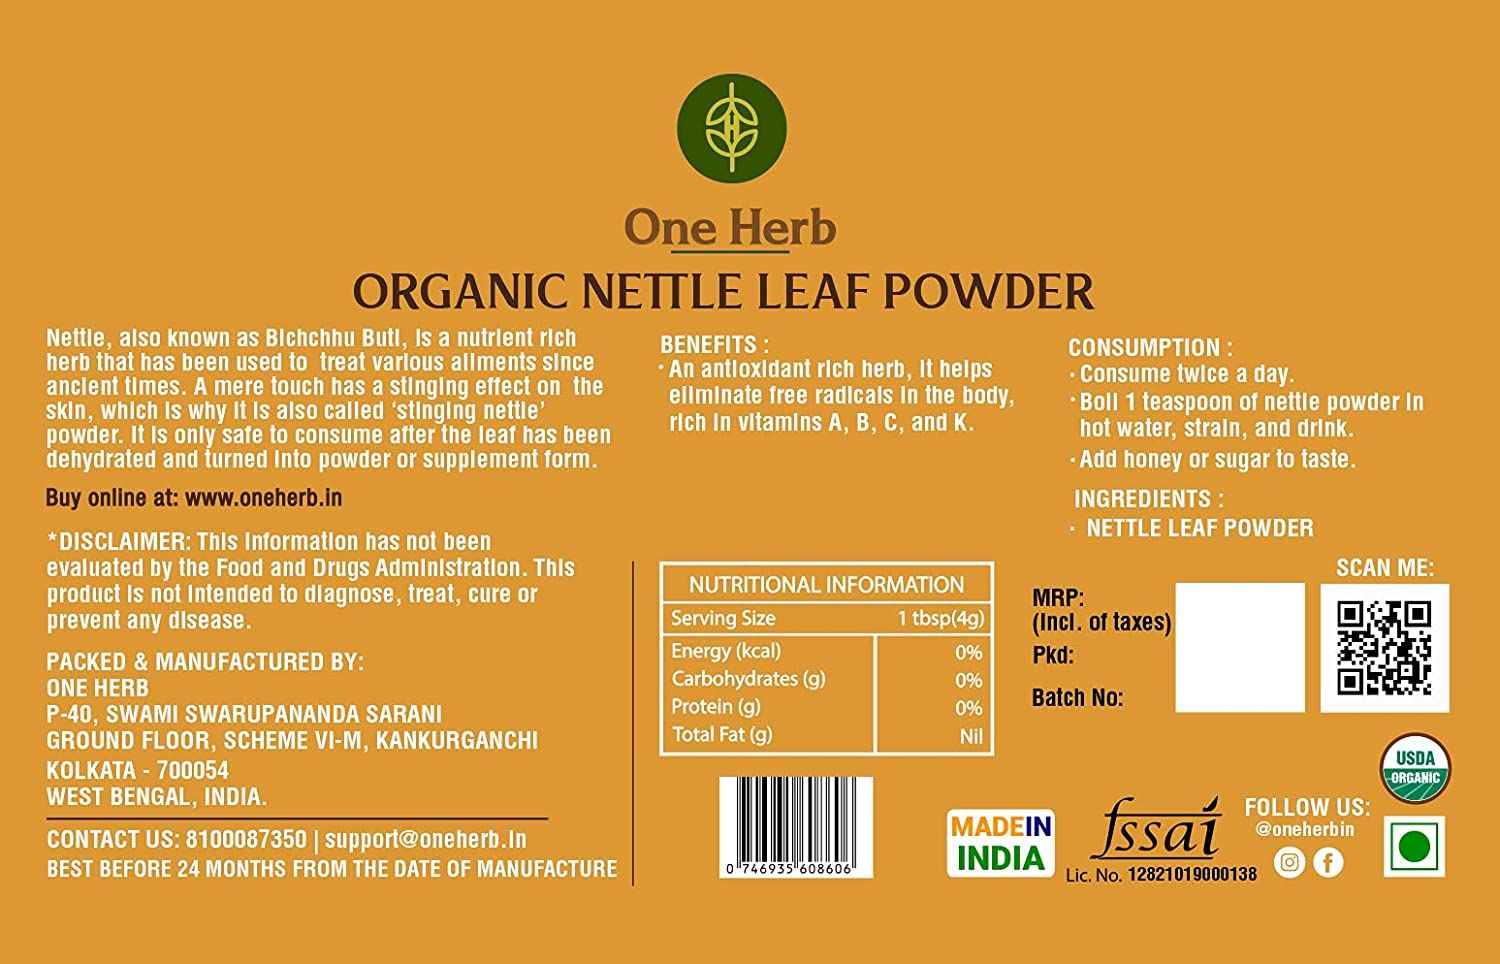 One Herb Organic Nettle Leaves Powder Image